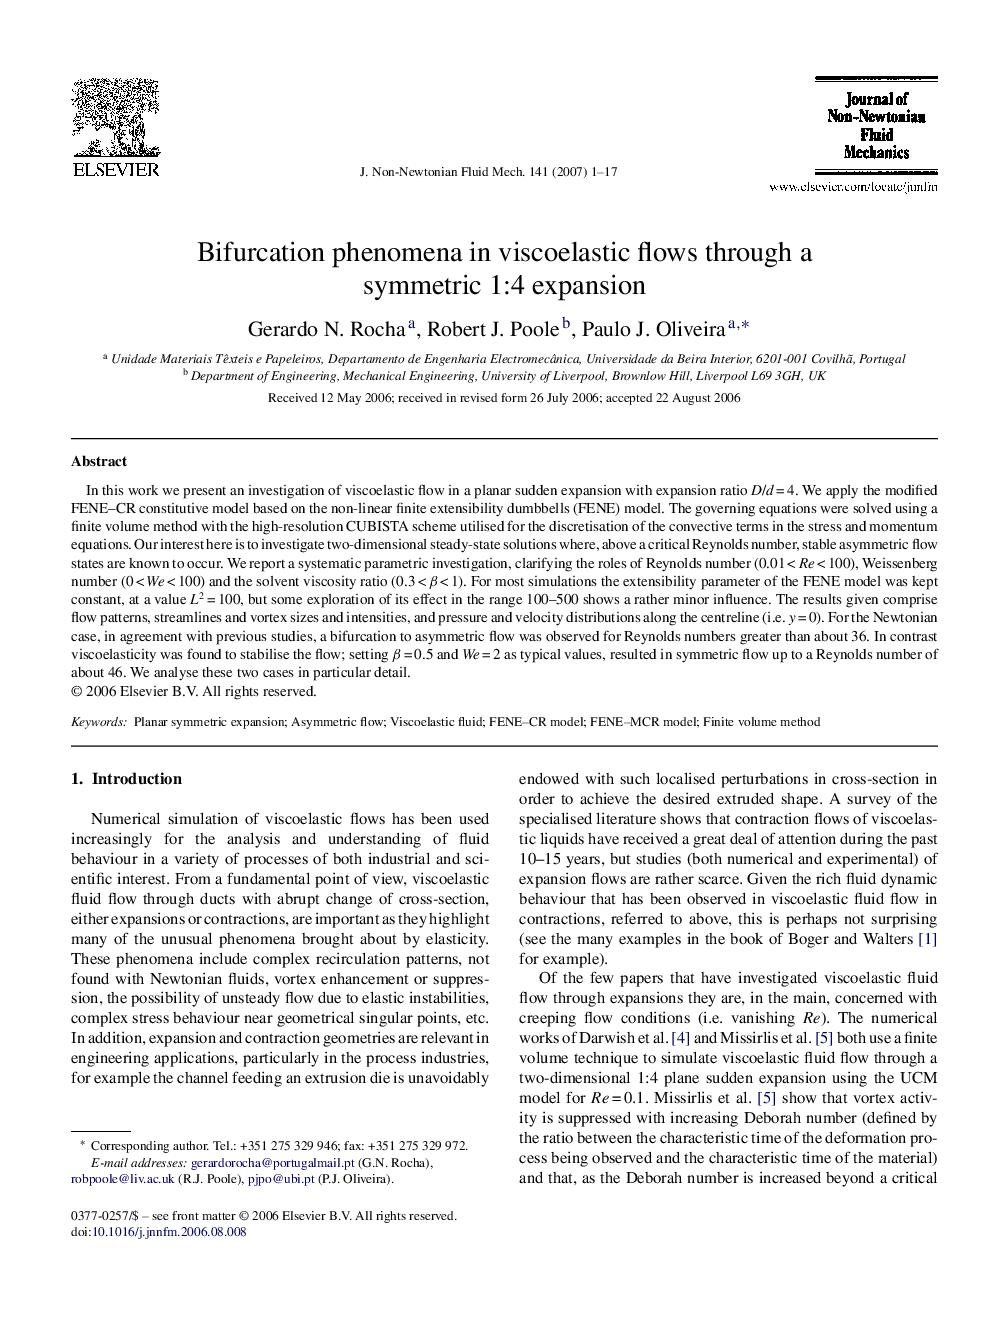 Bifurcation phenomena in viscoelastic flows through a symmetric 1:4 expansion